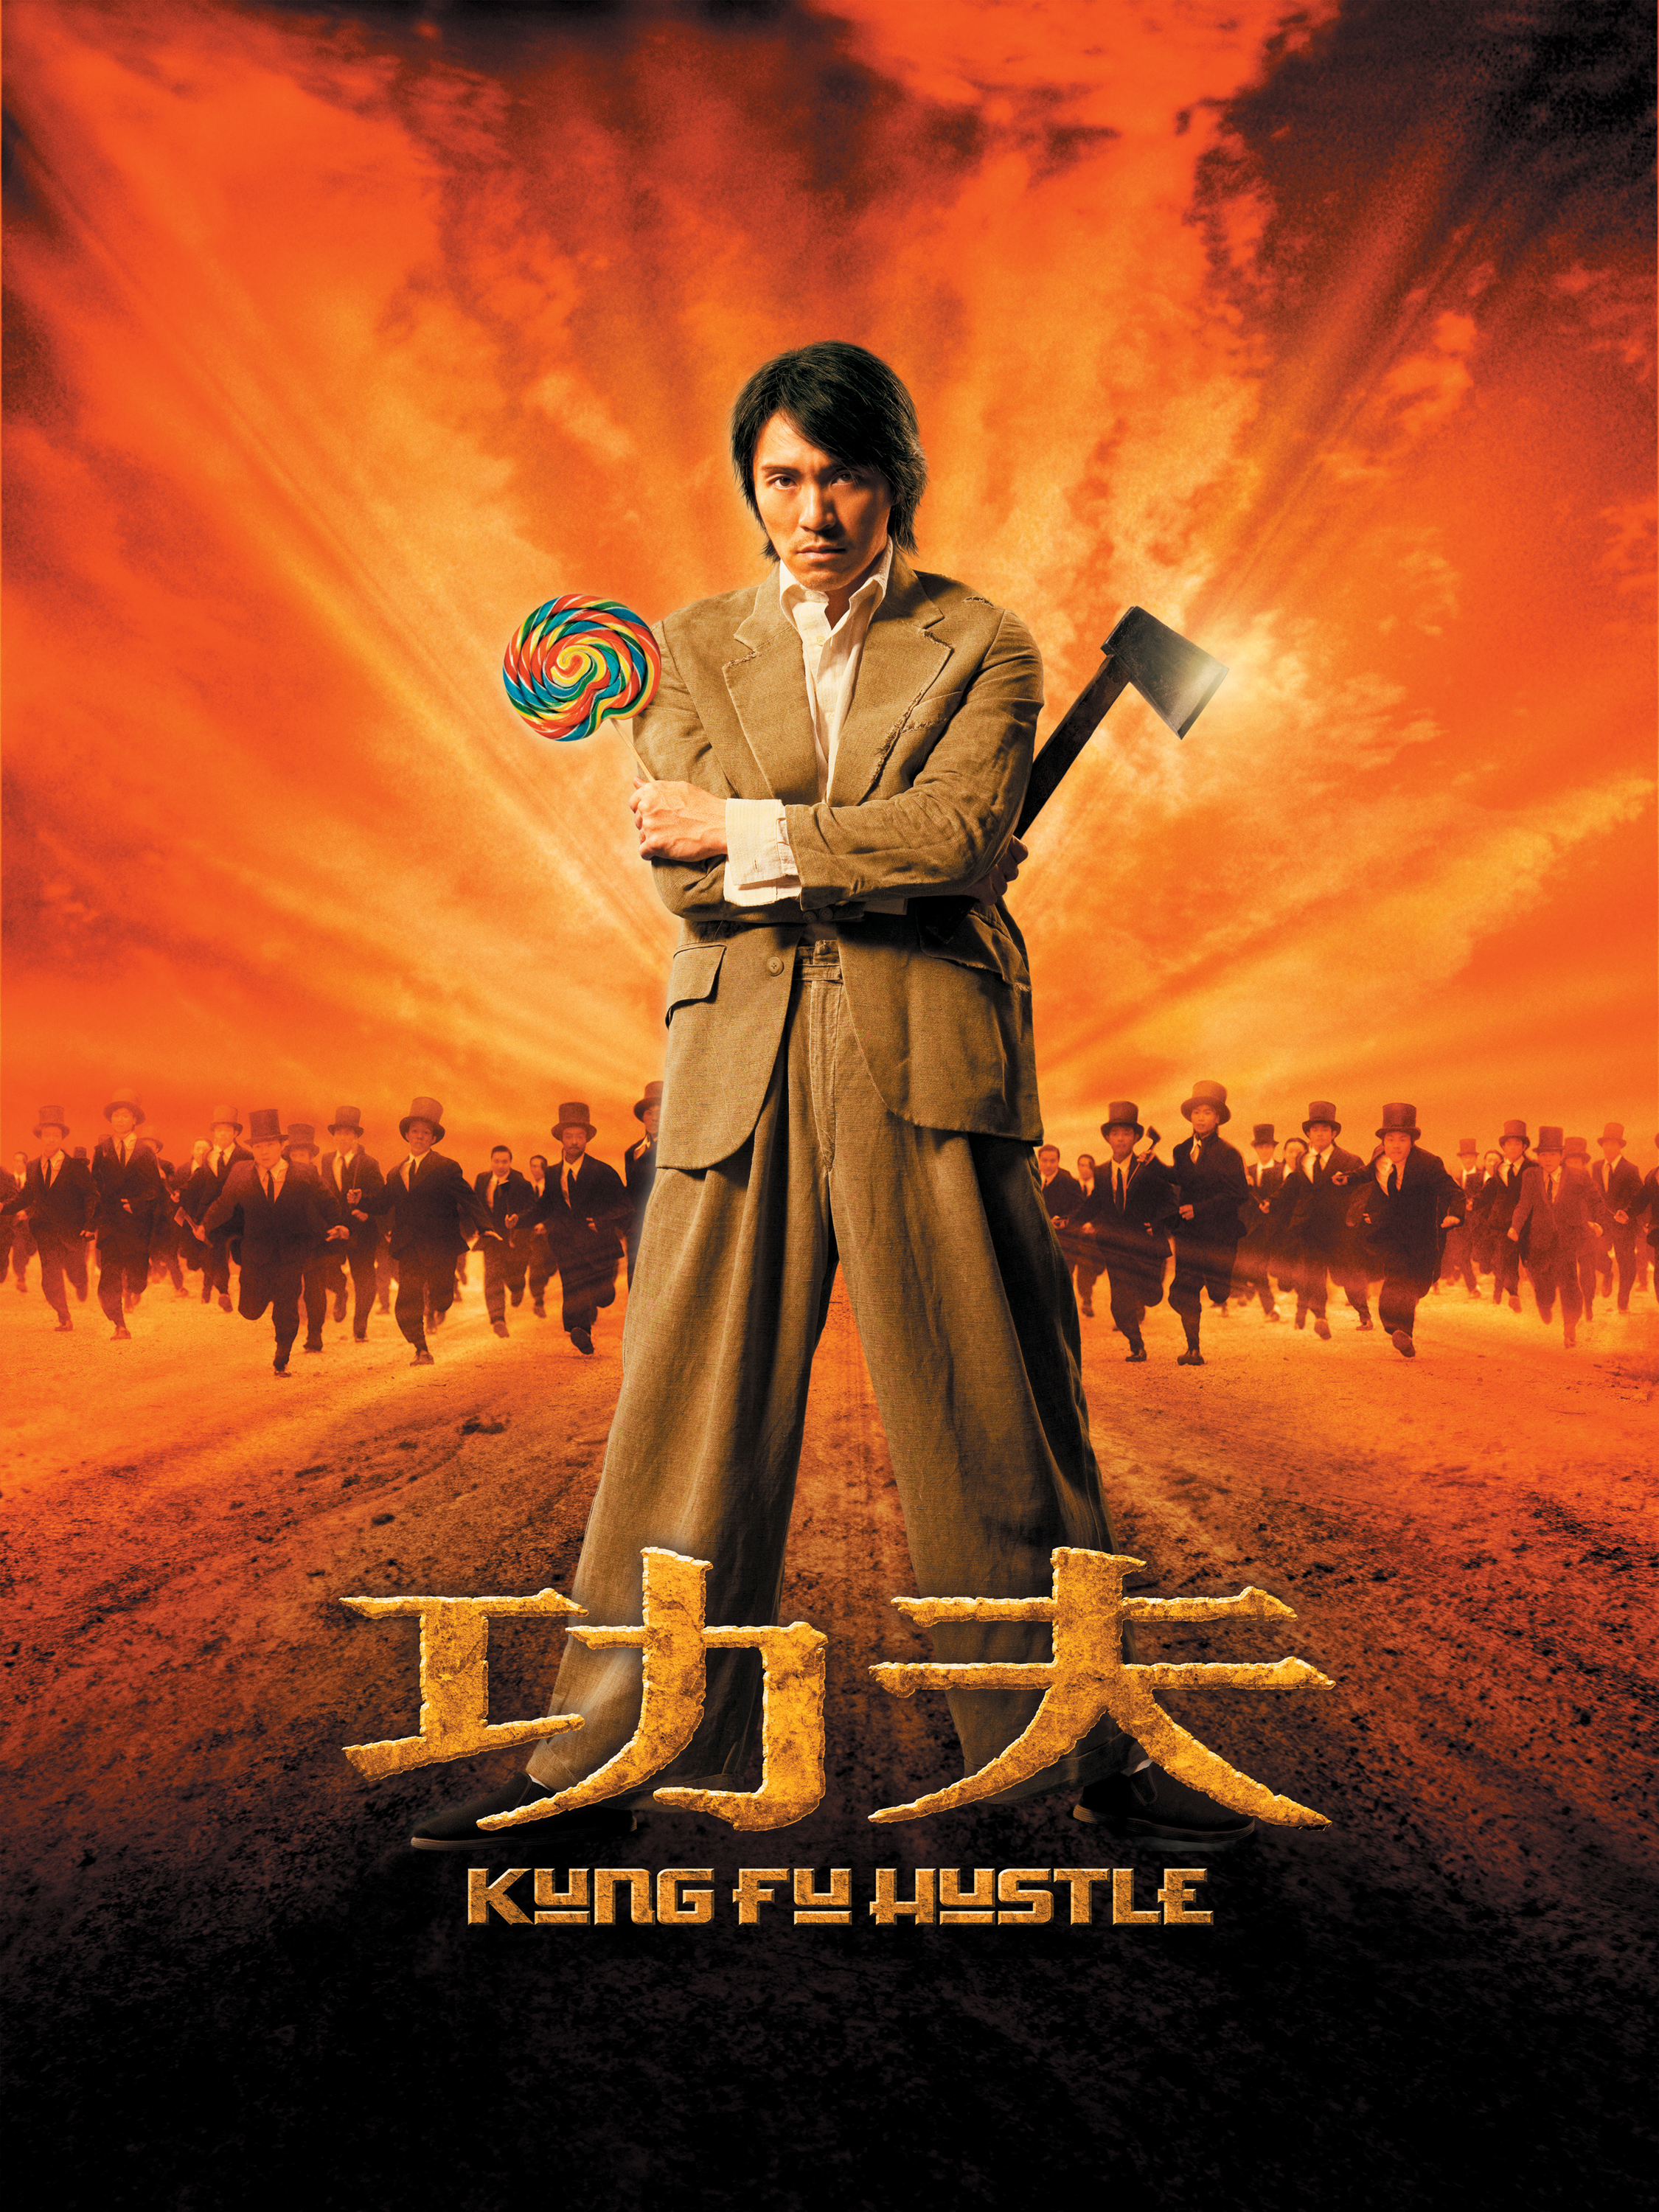 dorshai jackson share kung fu hustle downloads photos